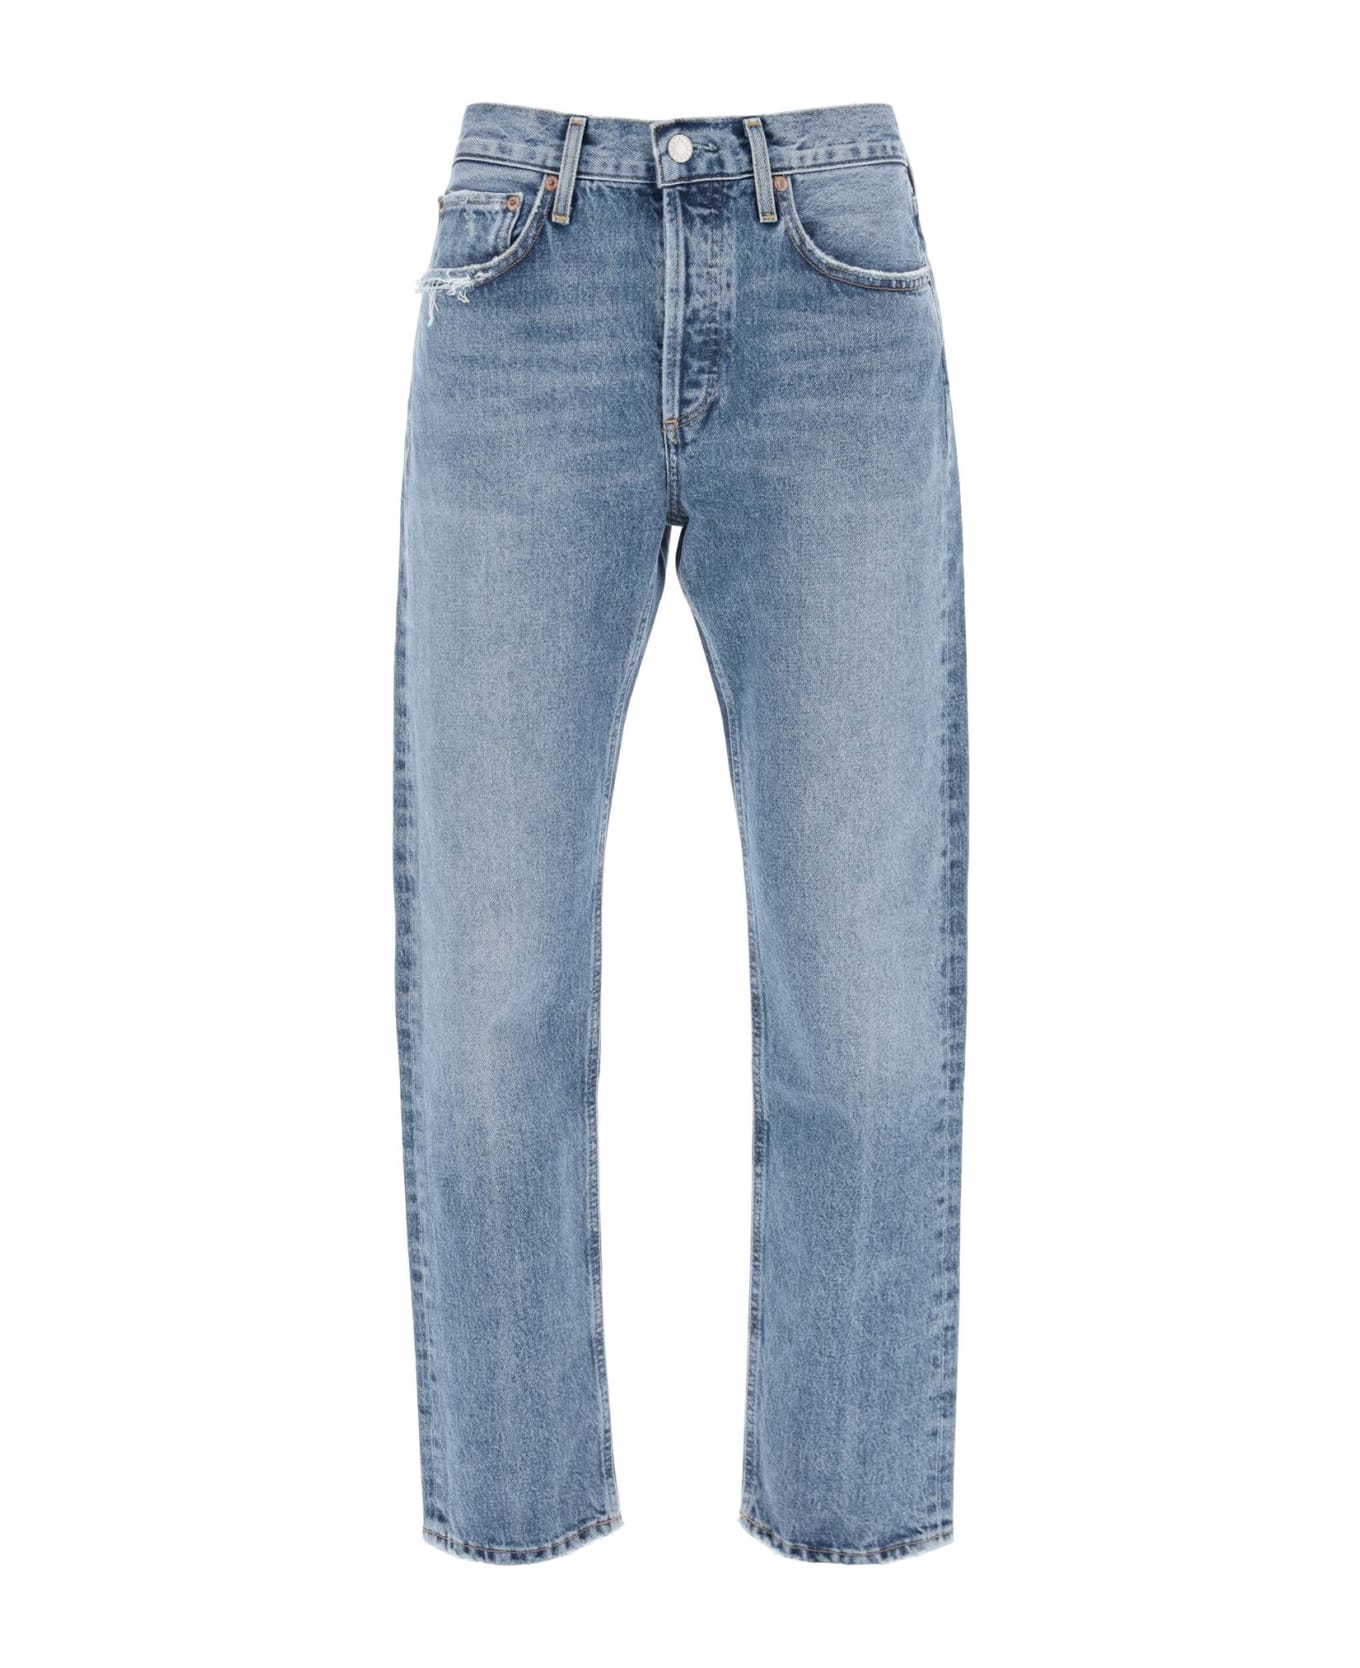 AGOLDE Parker Cropped Jeans - INVENTION (Light blue)